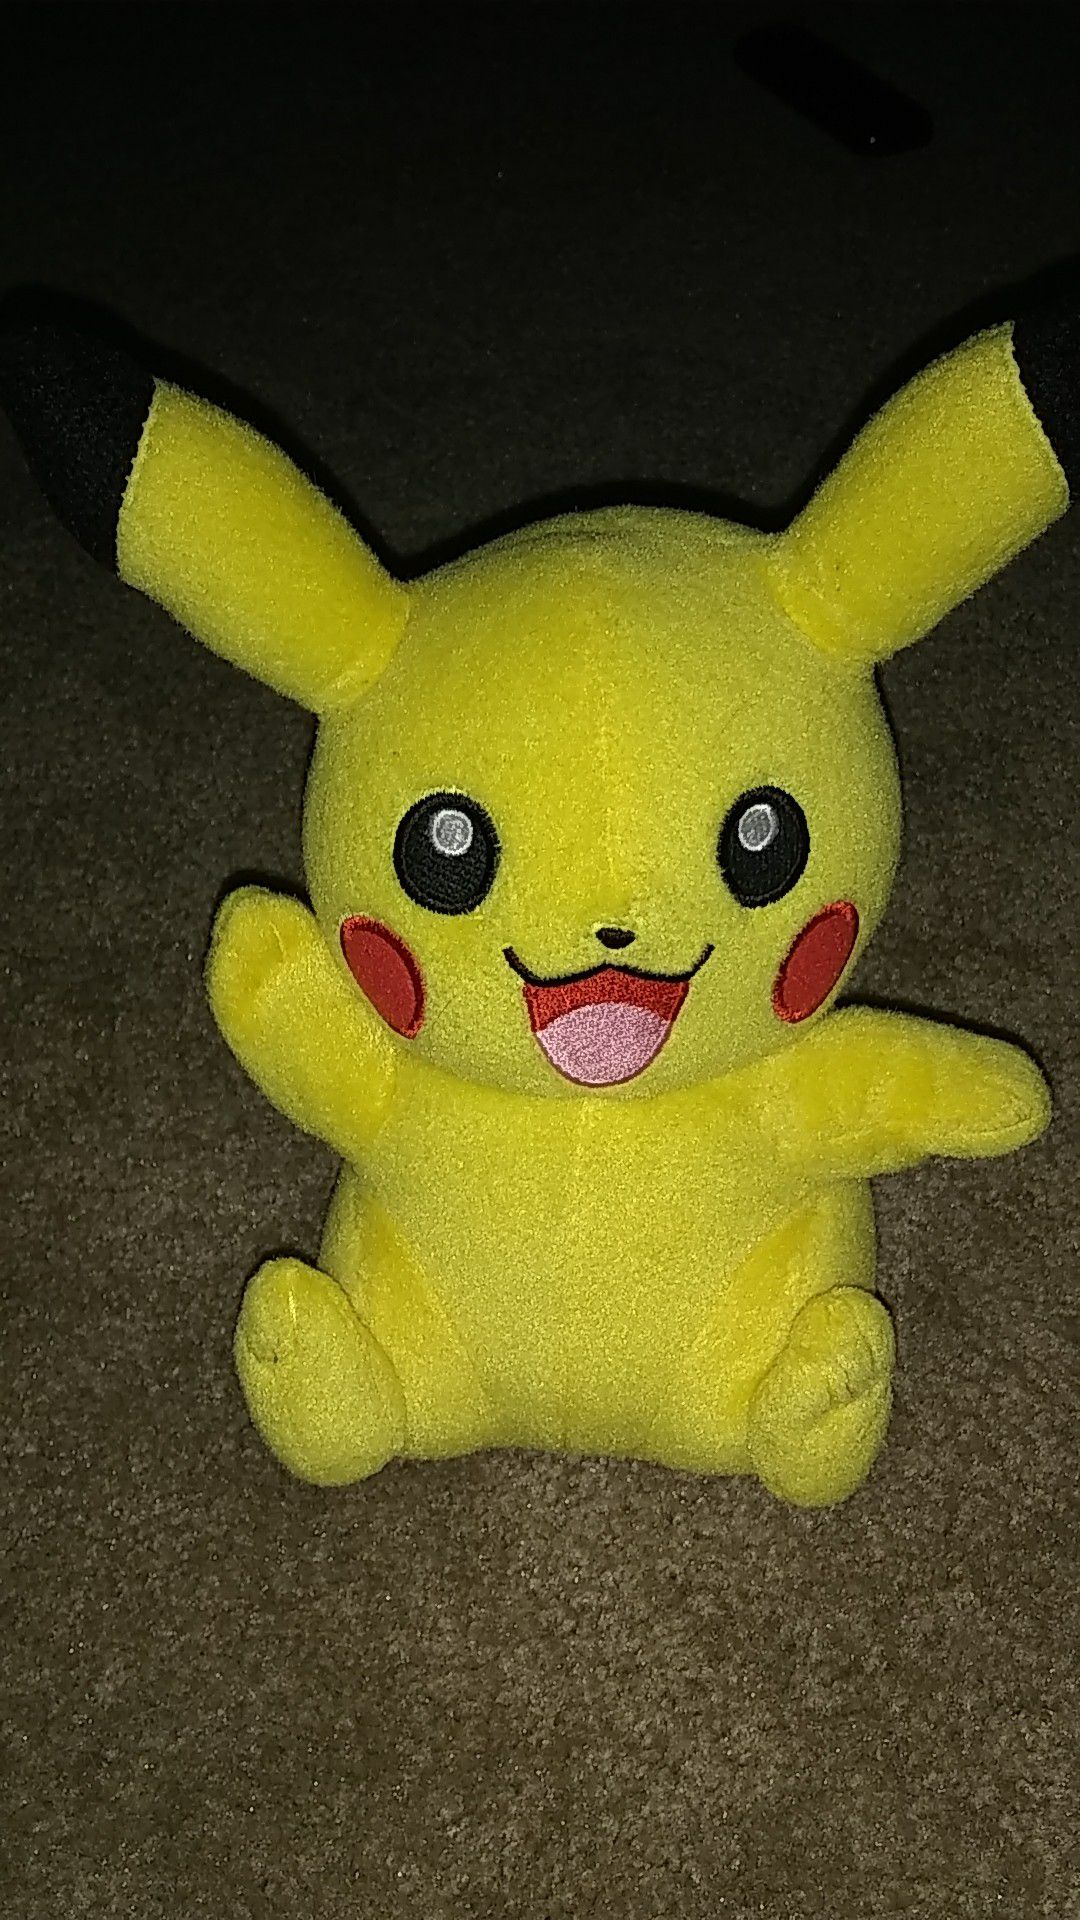 Pikachu plushie brand new limited edition